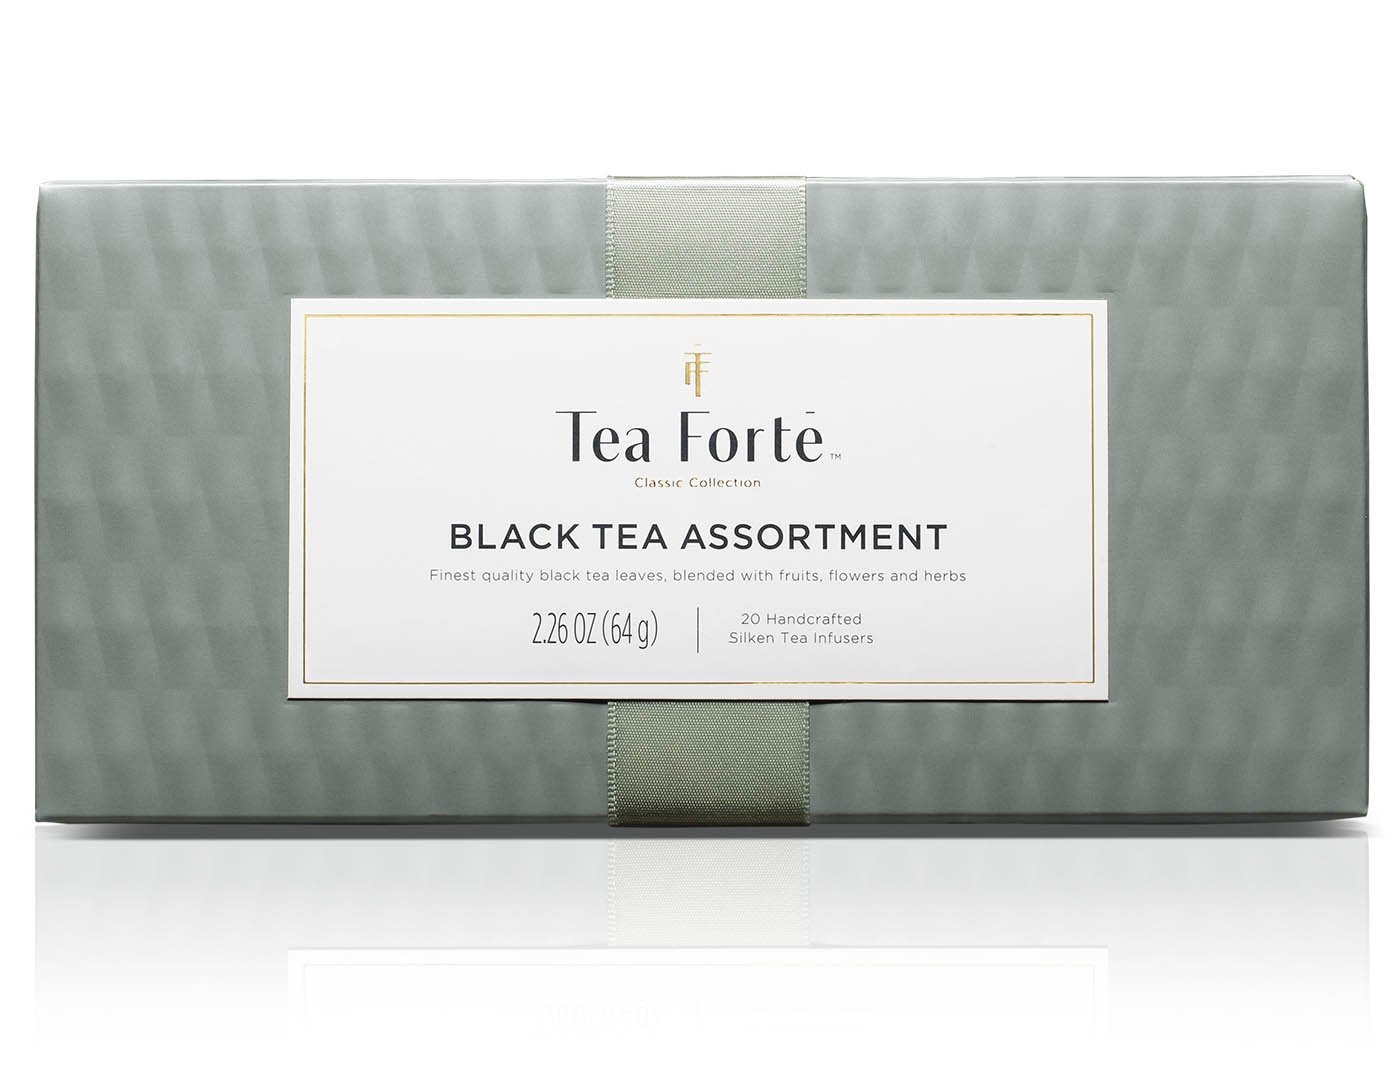 Black tea assortment in a 20 count presentation box - view of box top